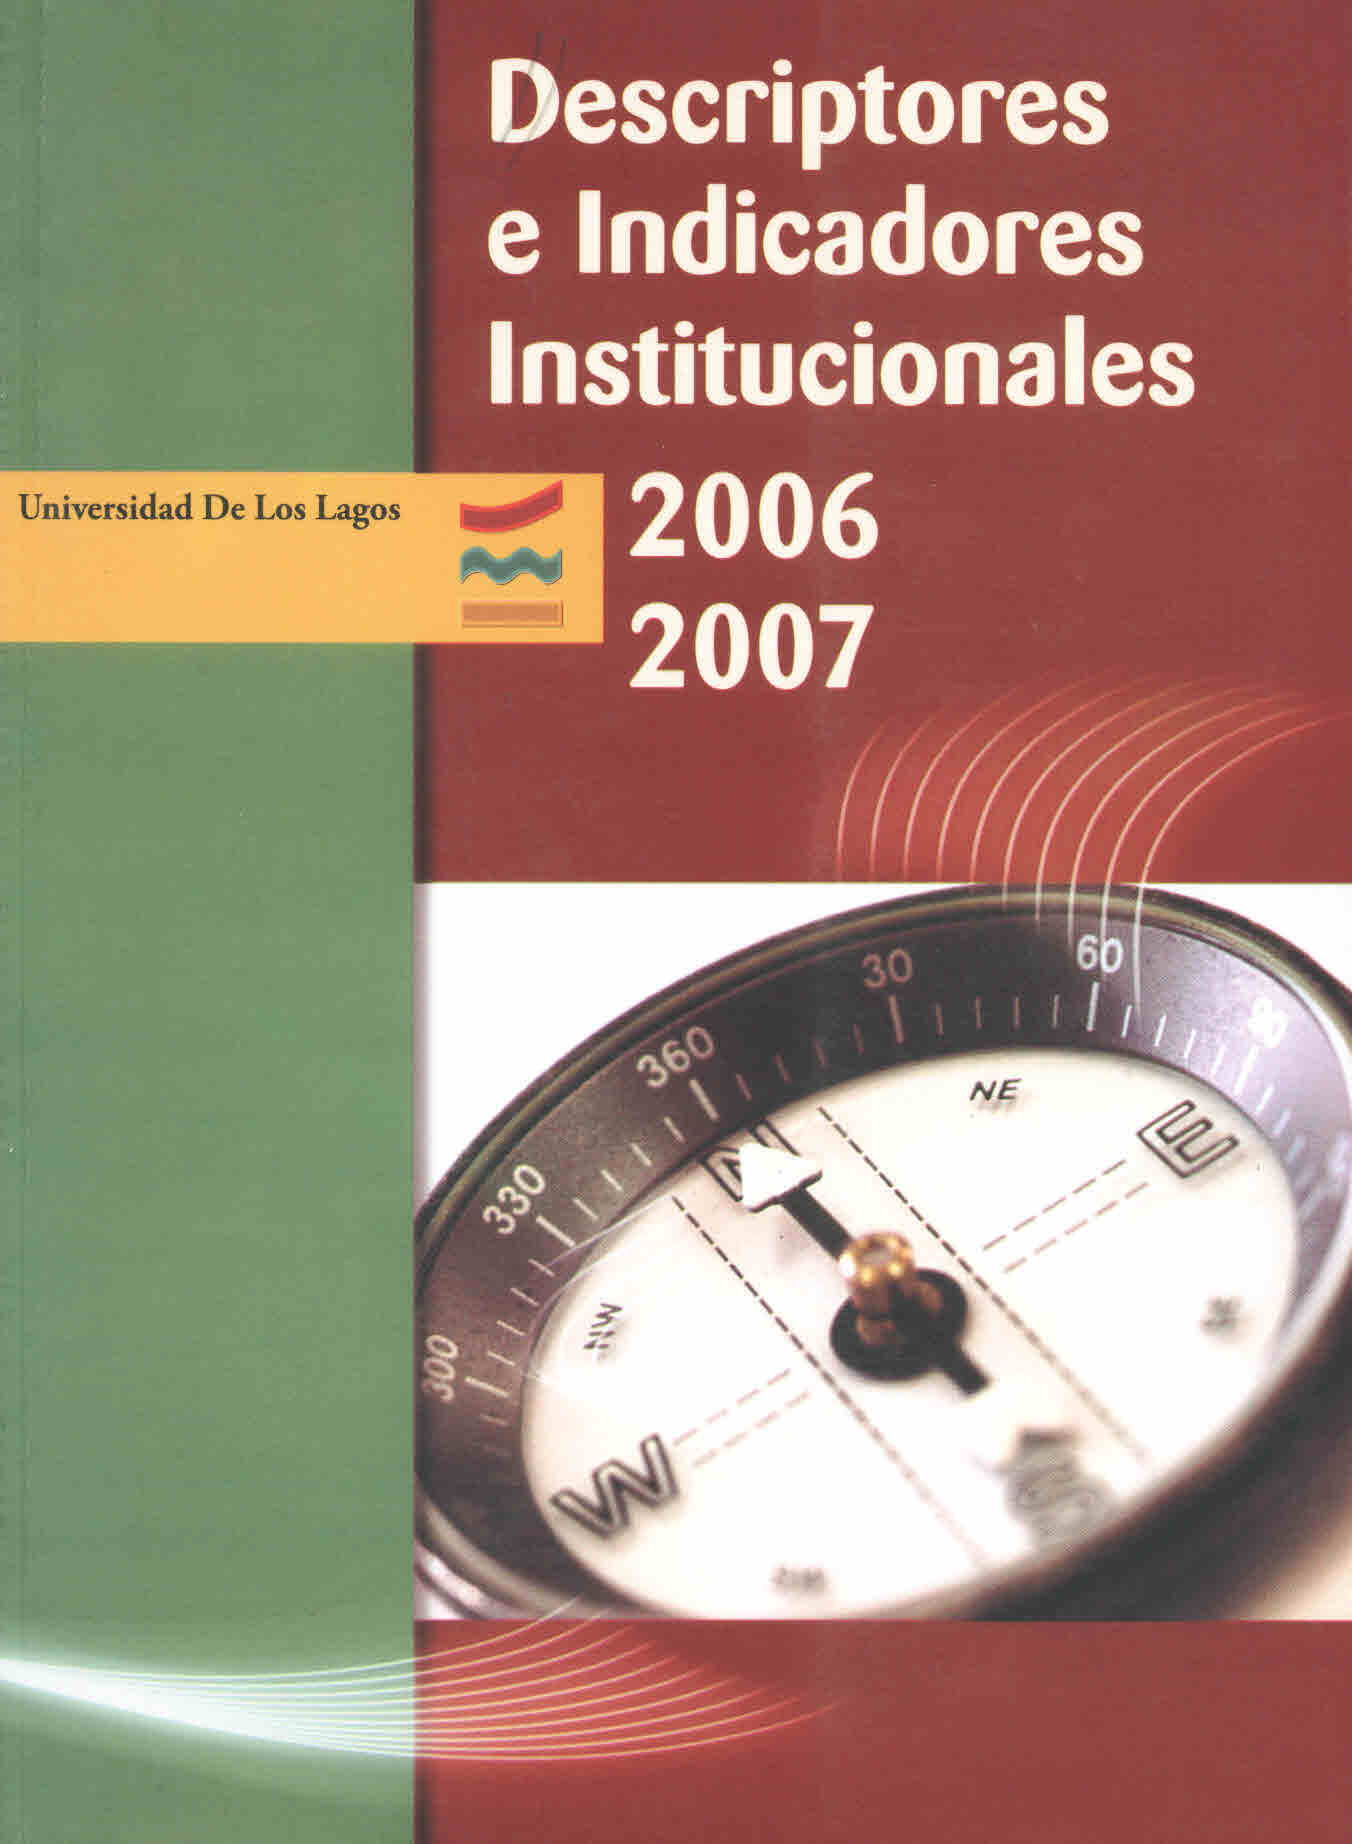 Descriptores e indicadores institucionales 2006-2007